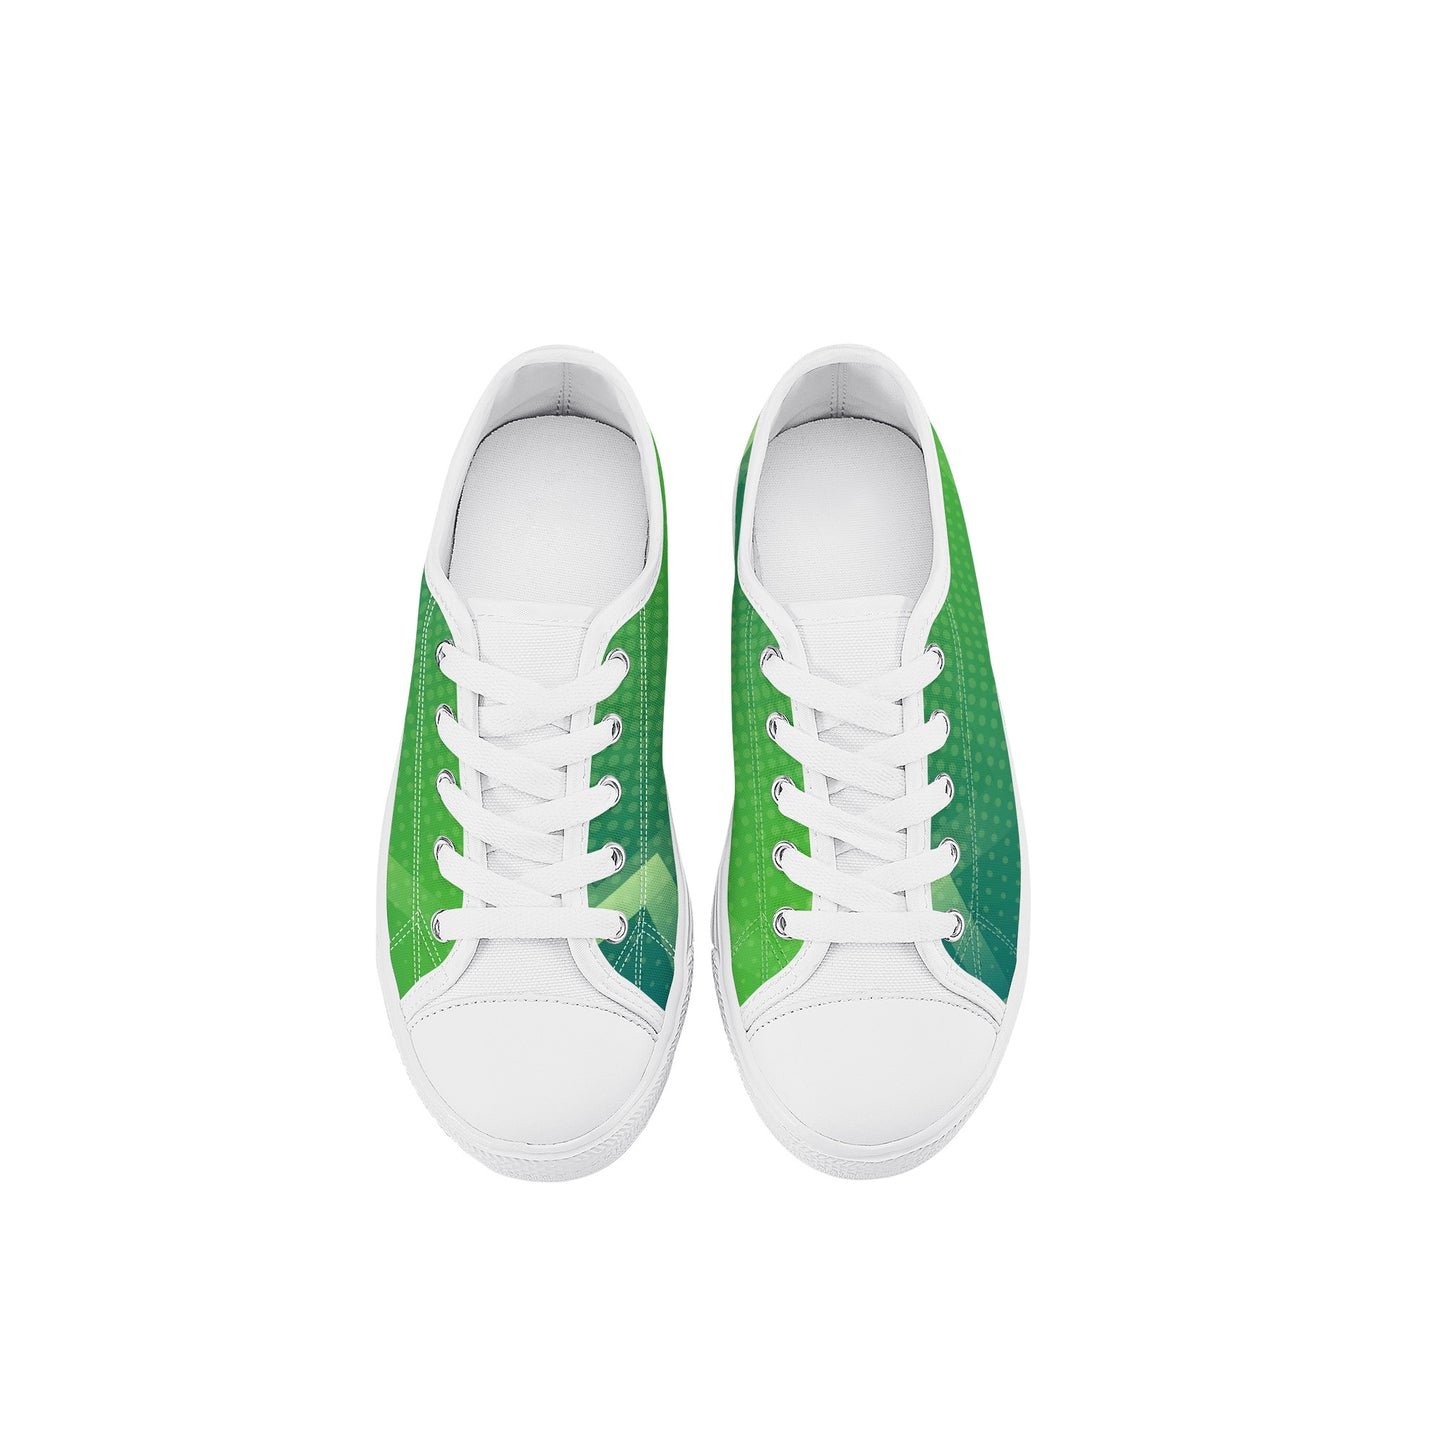 Kids Low Top Canvas Sneakers - Green